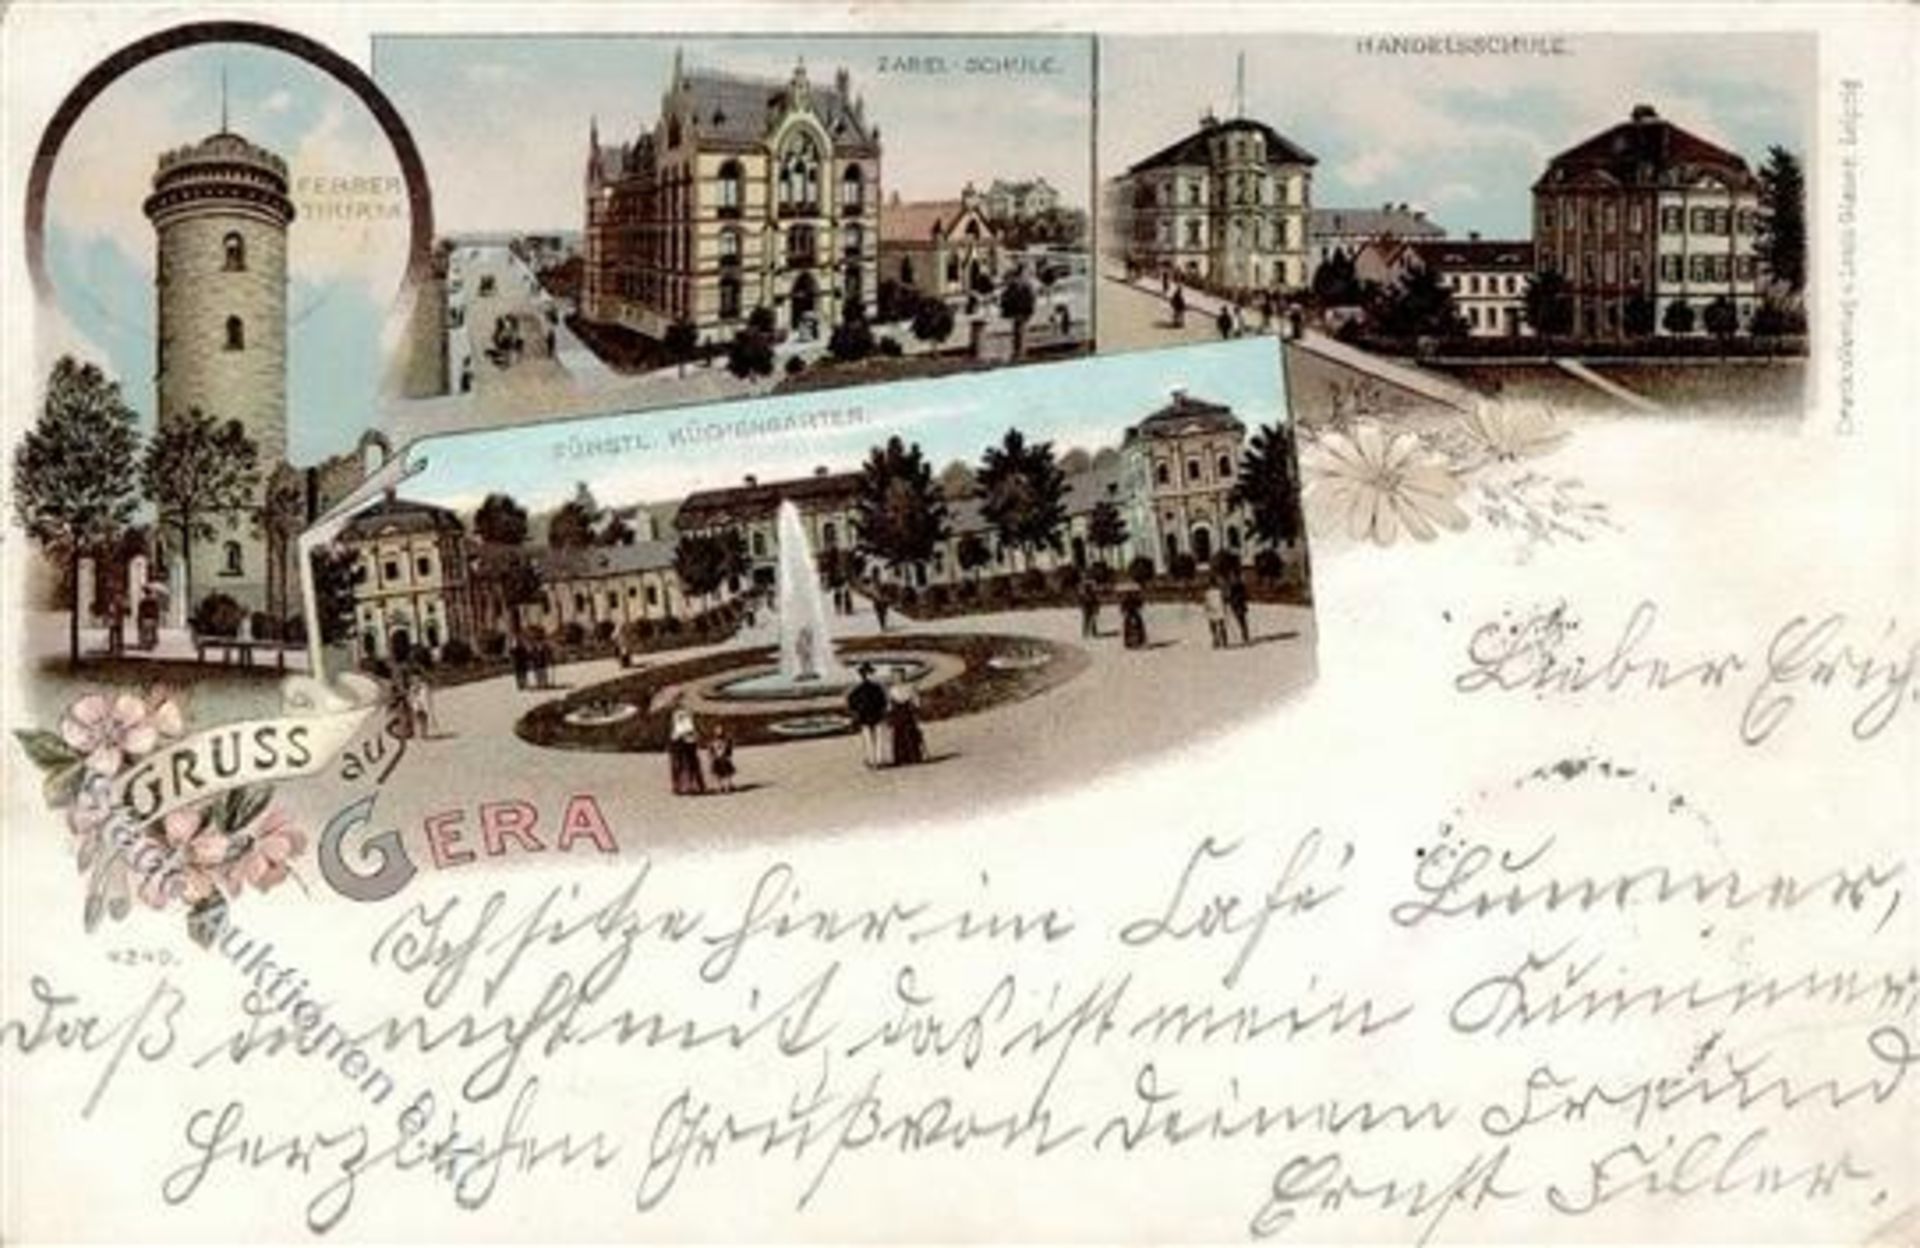 Gera (O6500) Zabel-Schule Handelsschule Ferberturm Fürstl. Küchengarten Lithographie 1897 I-II (